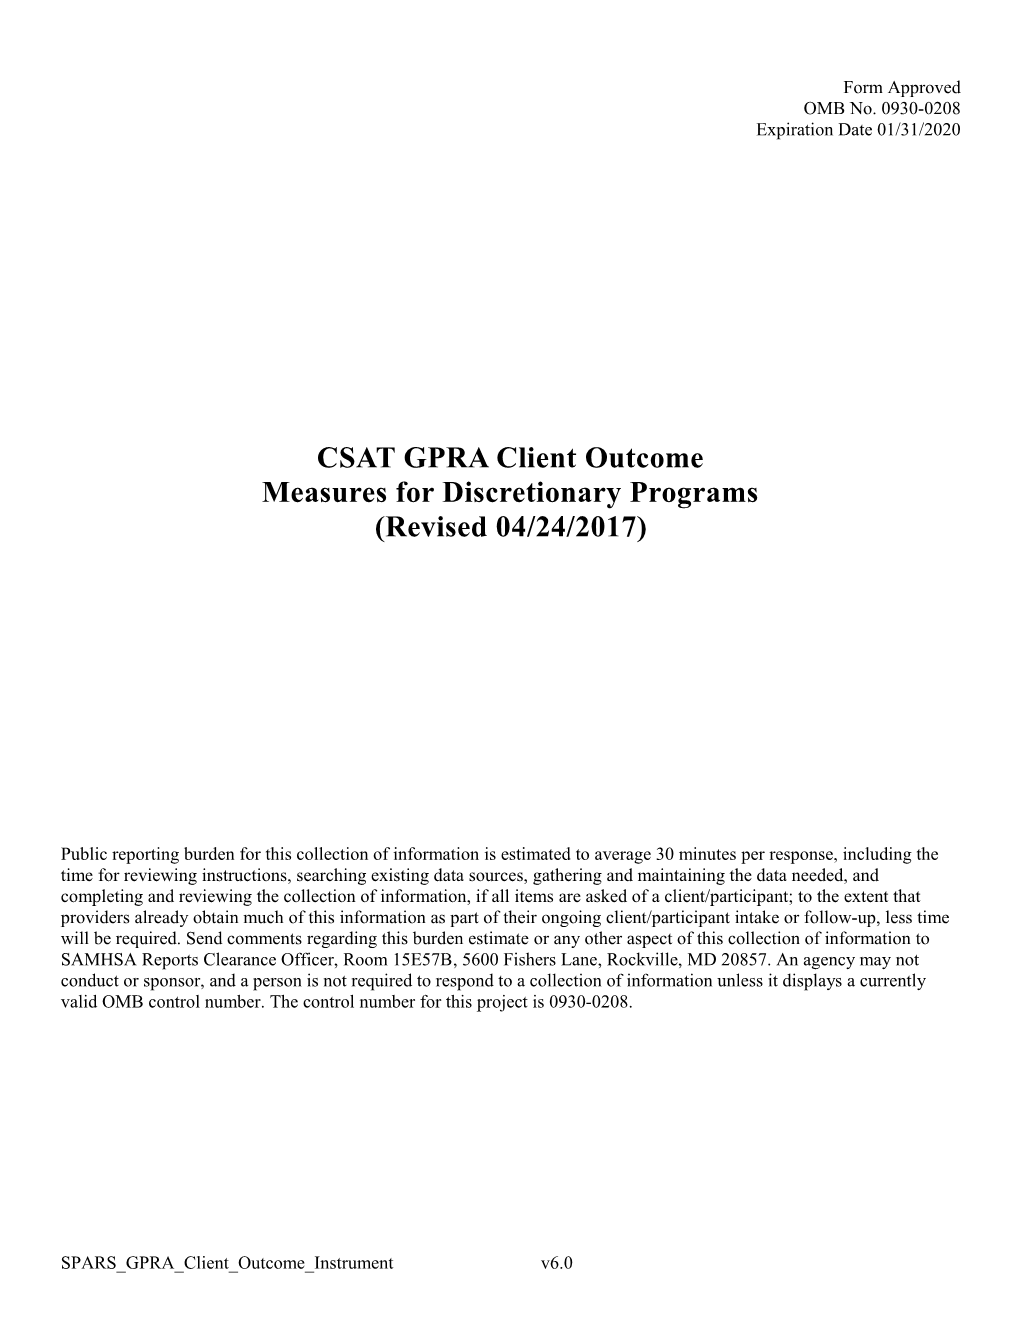 CSAT GPRA Client Outcome Measures for Discretionary Programs (Revised 04/24/2017)